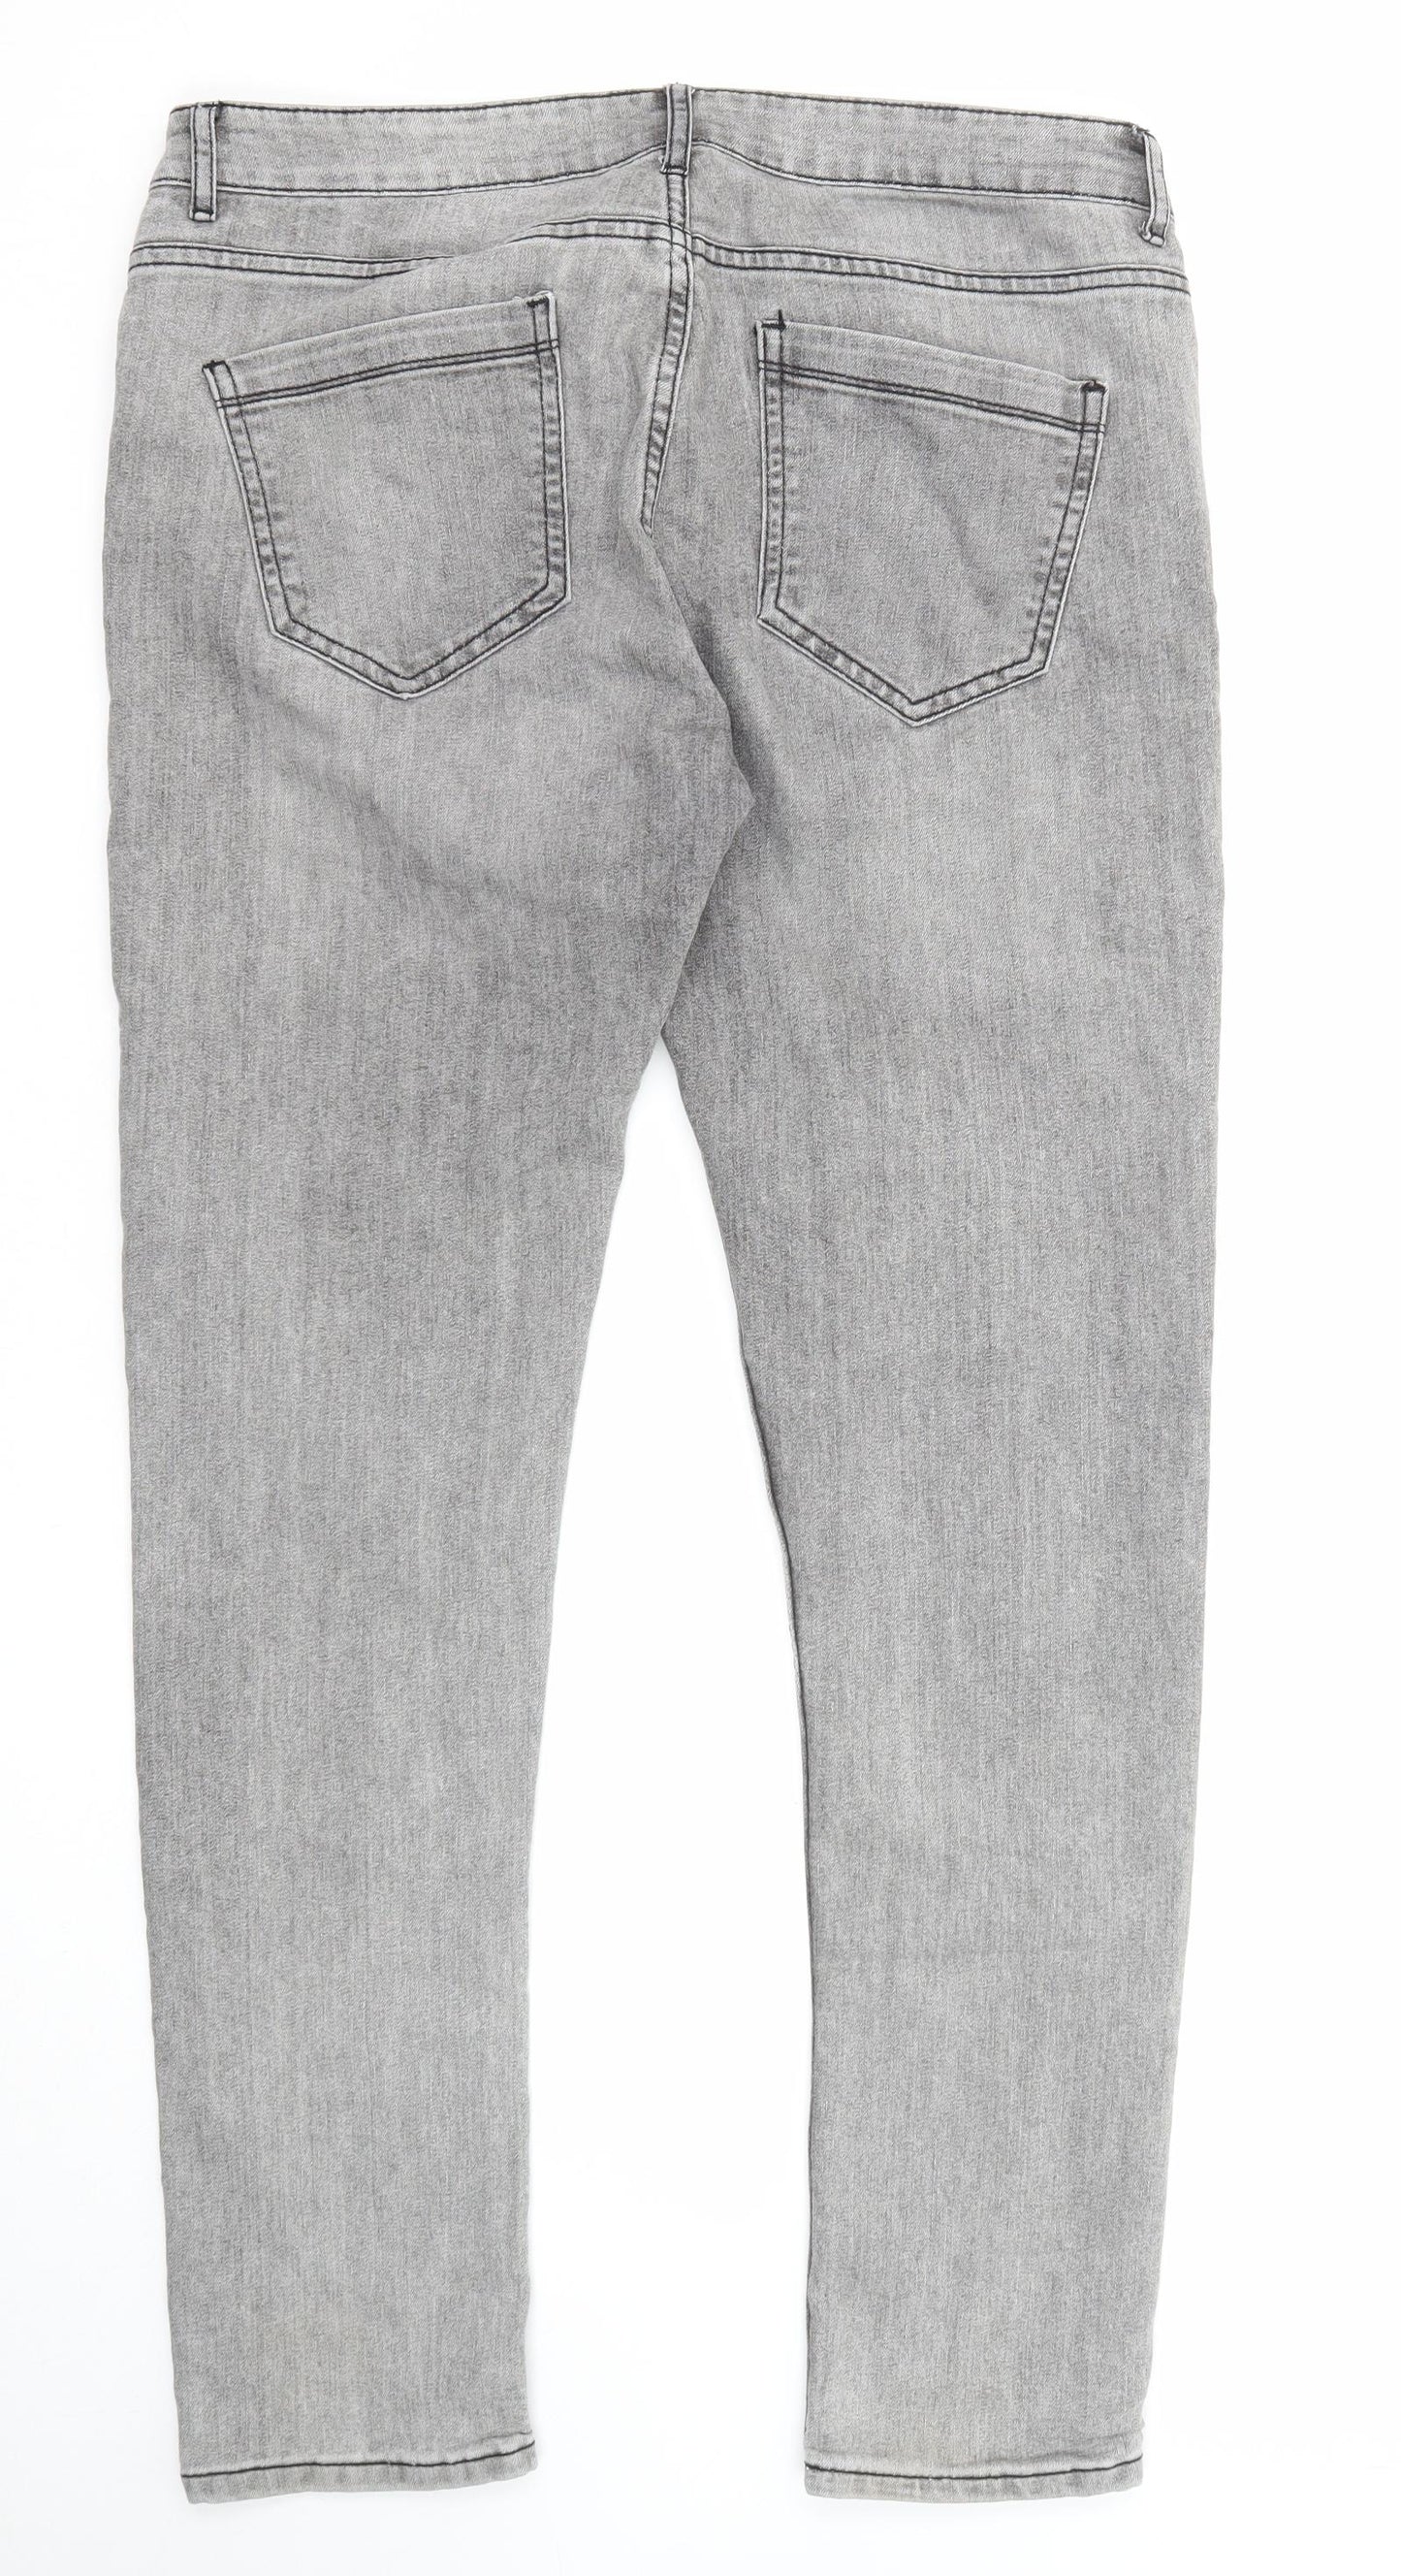 Denim & Co. Womens Grey Cotton Skinny Jeans Size 34 in L30 in Regular Zip